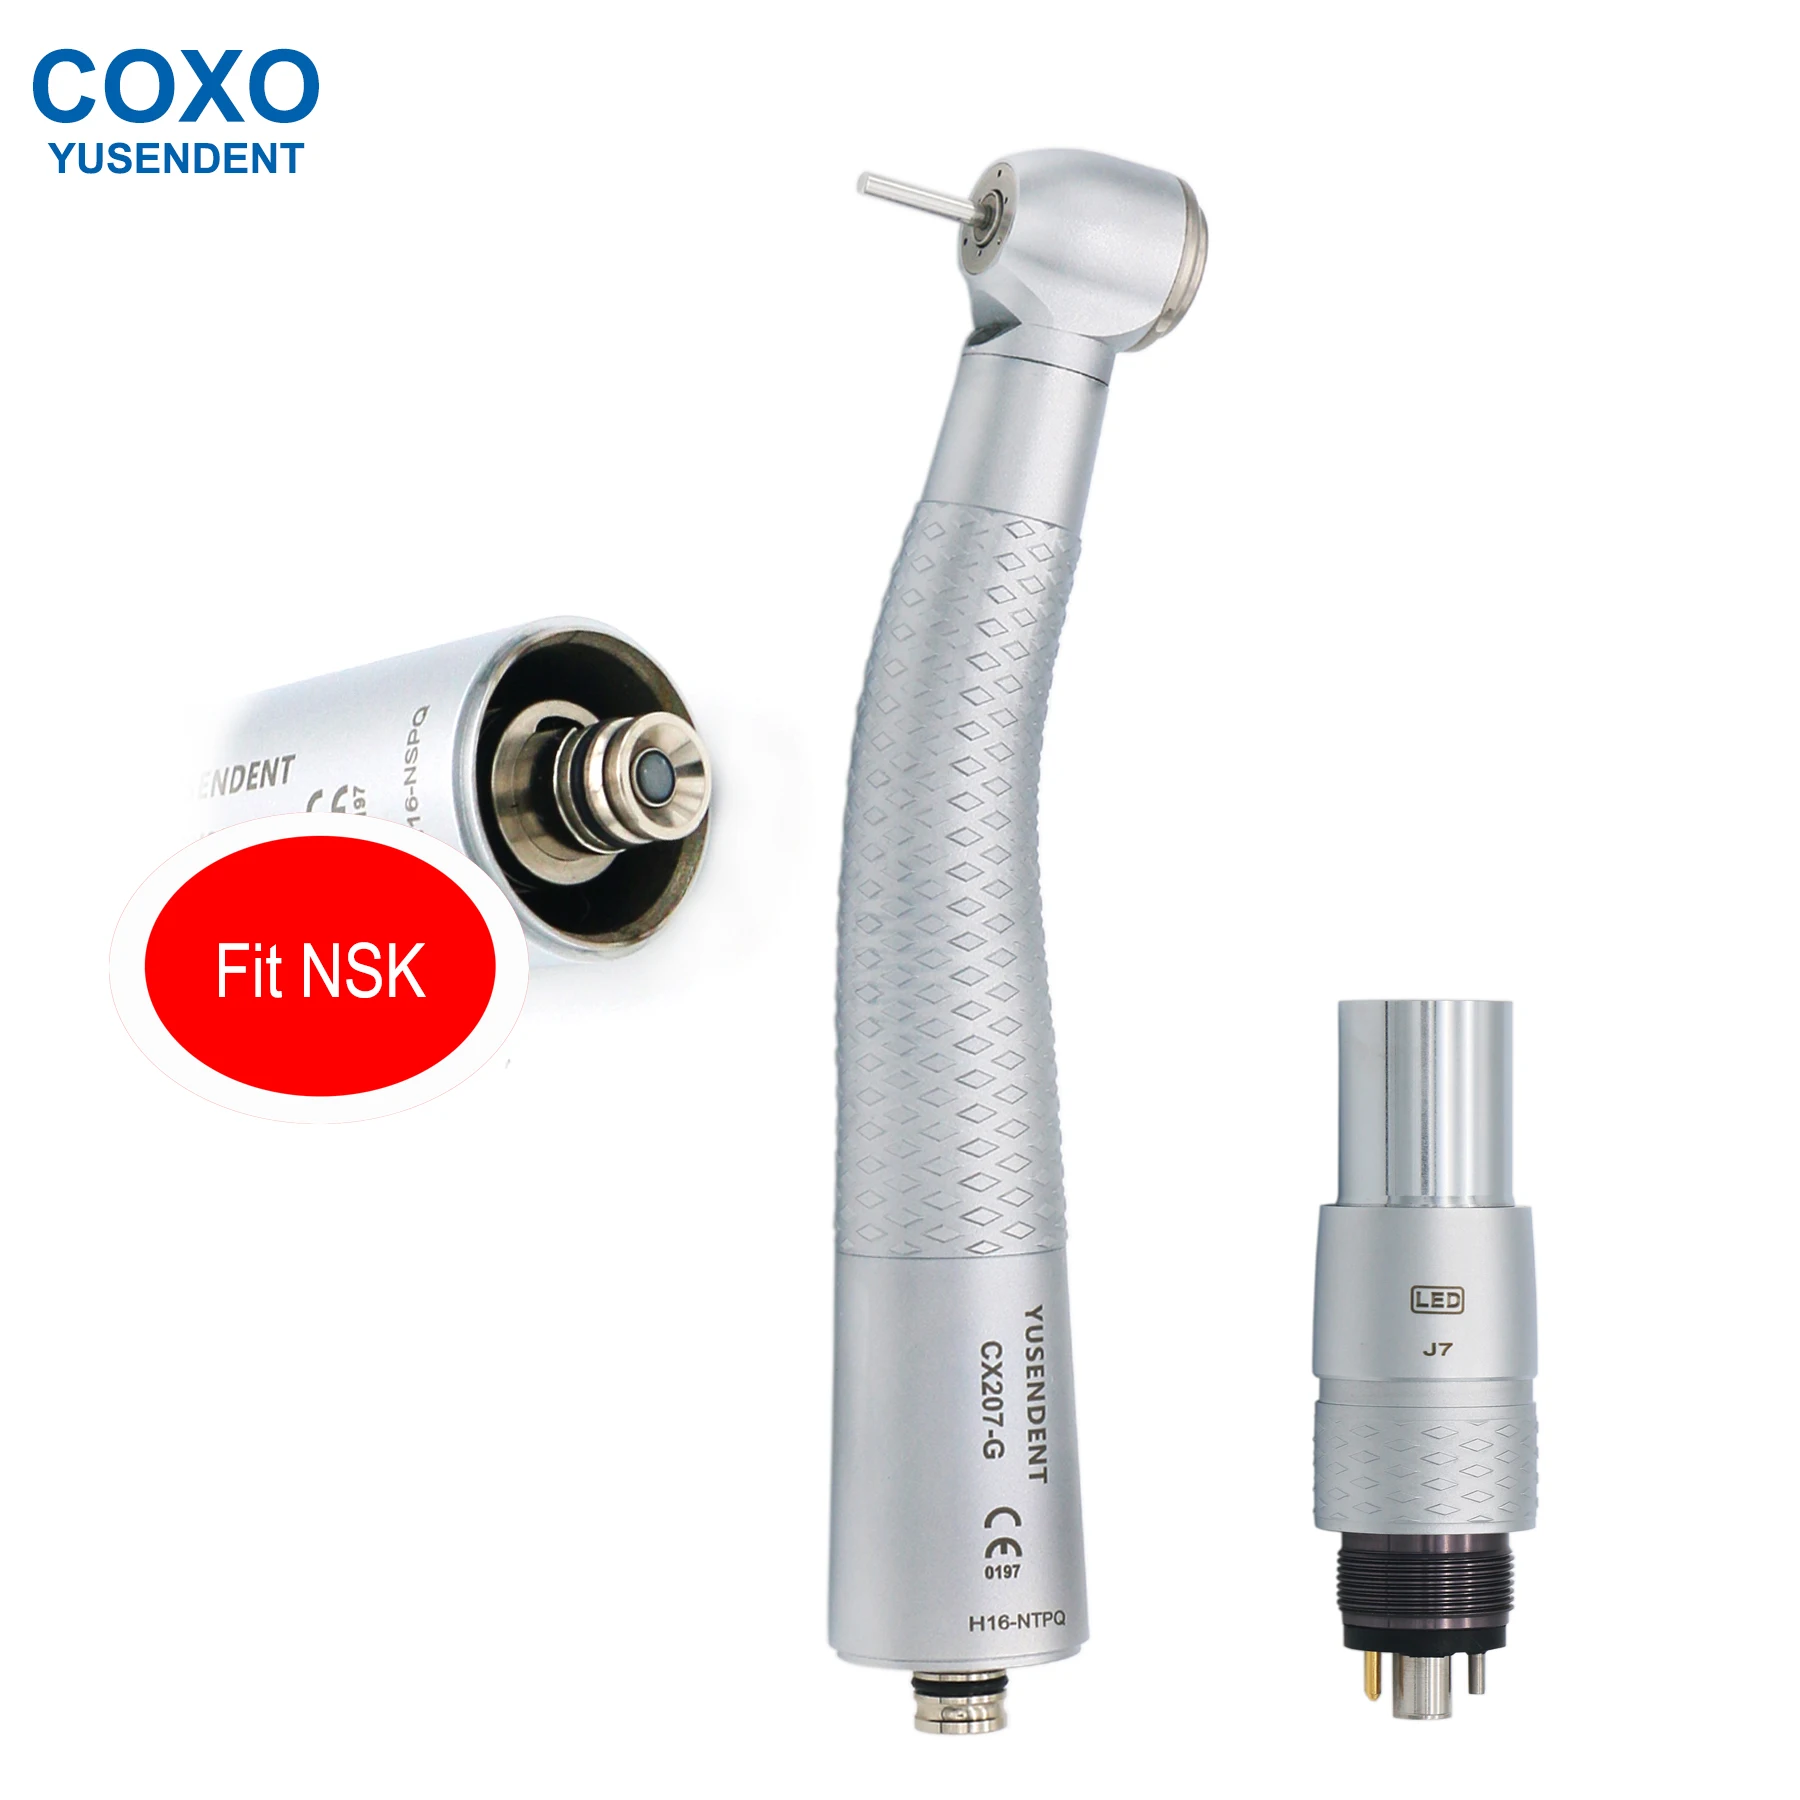 

COXO YUSENDENT High Speed Dental Handpiece With LED Light Fiber Optic Dental Turbine CX207-G Quick Coupler 6 Holes Fit NSK